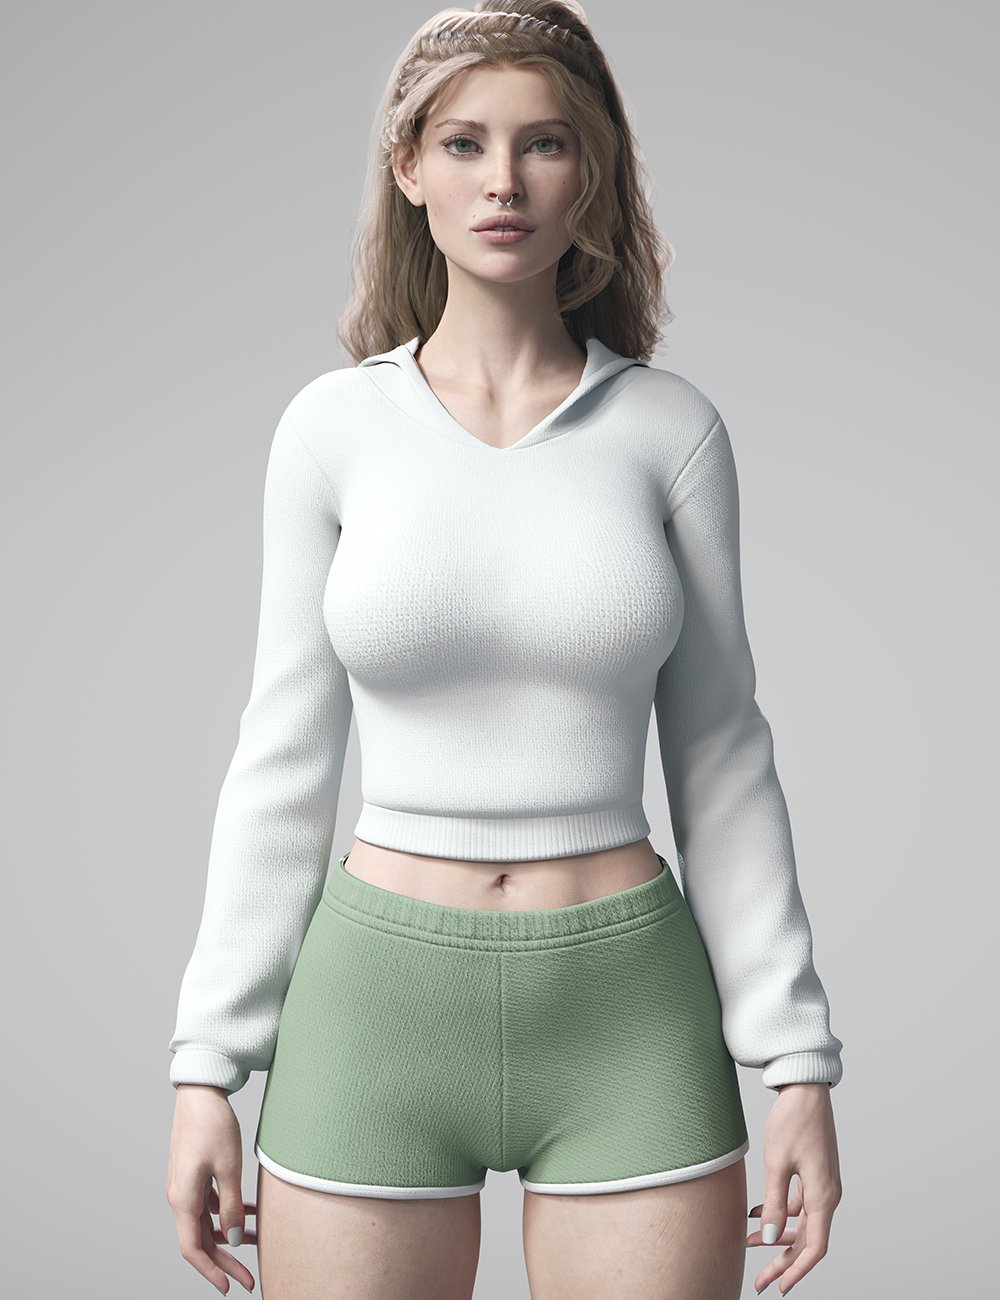 dForce Homebody for Genesis 8 Female(s) by: peache, 3D Models by Daz 3D